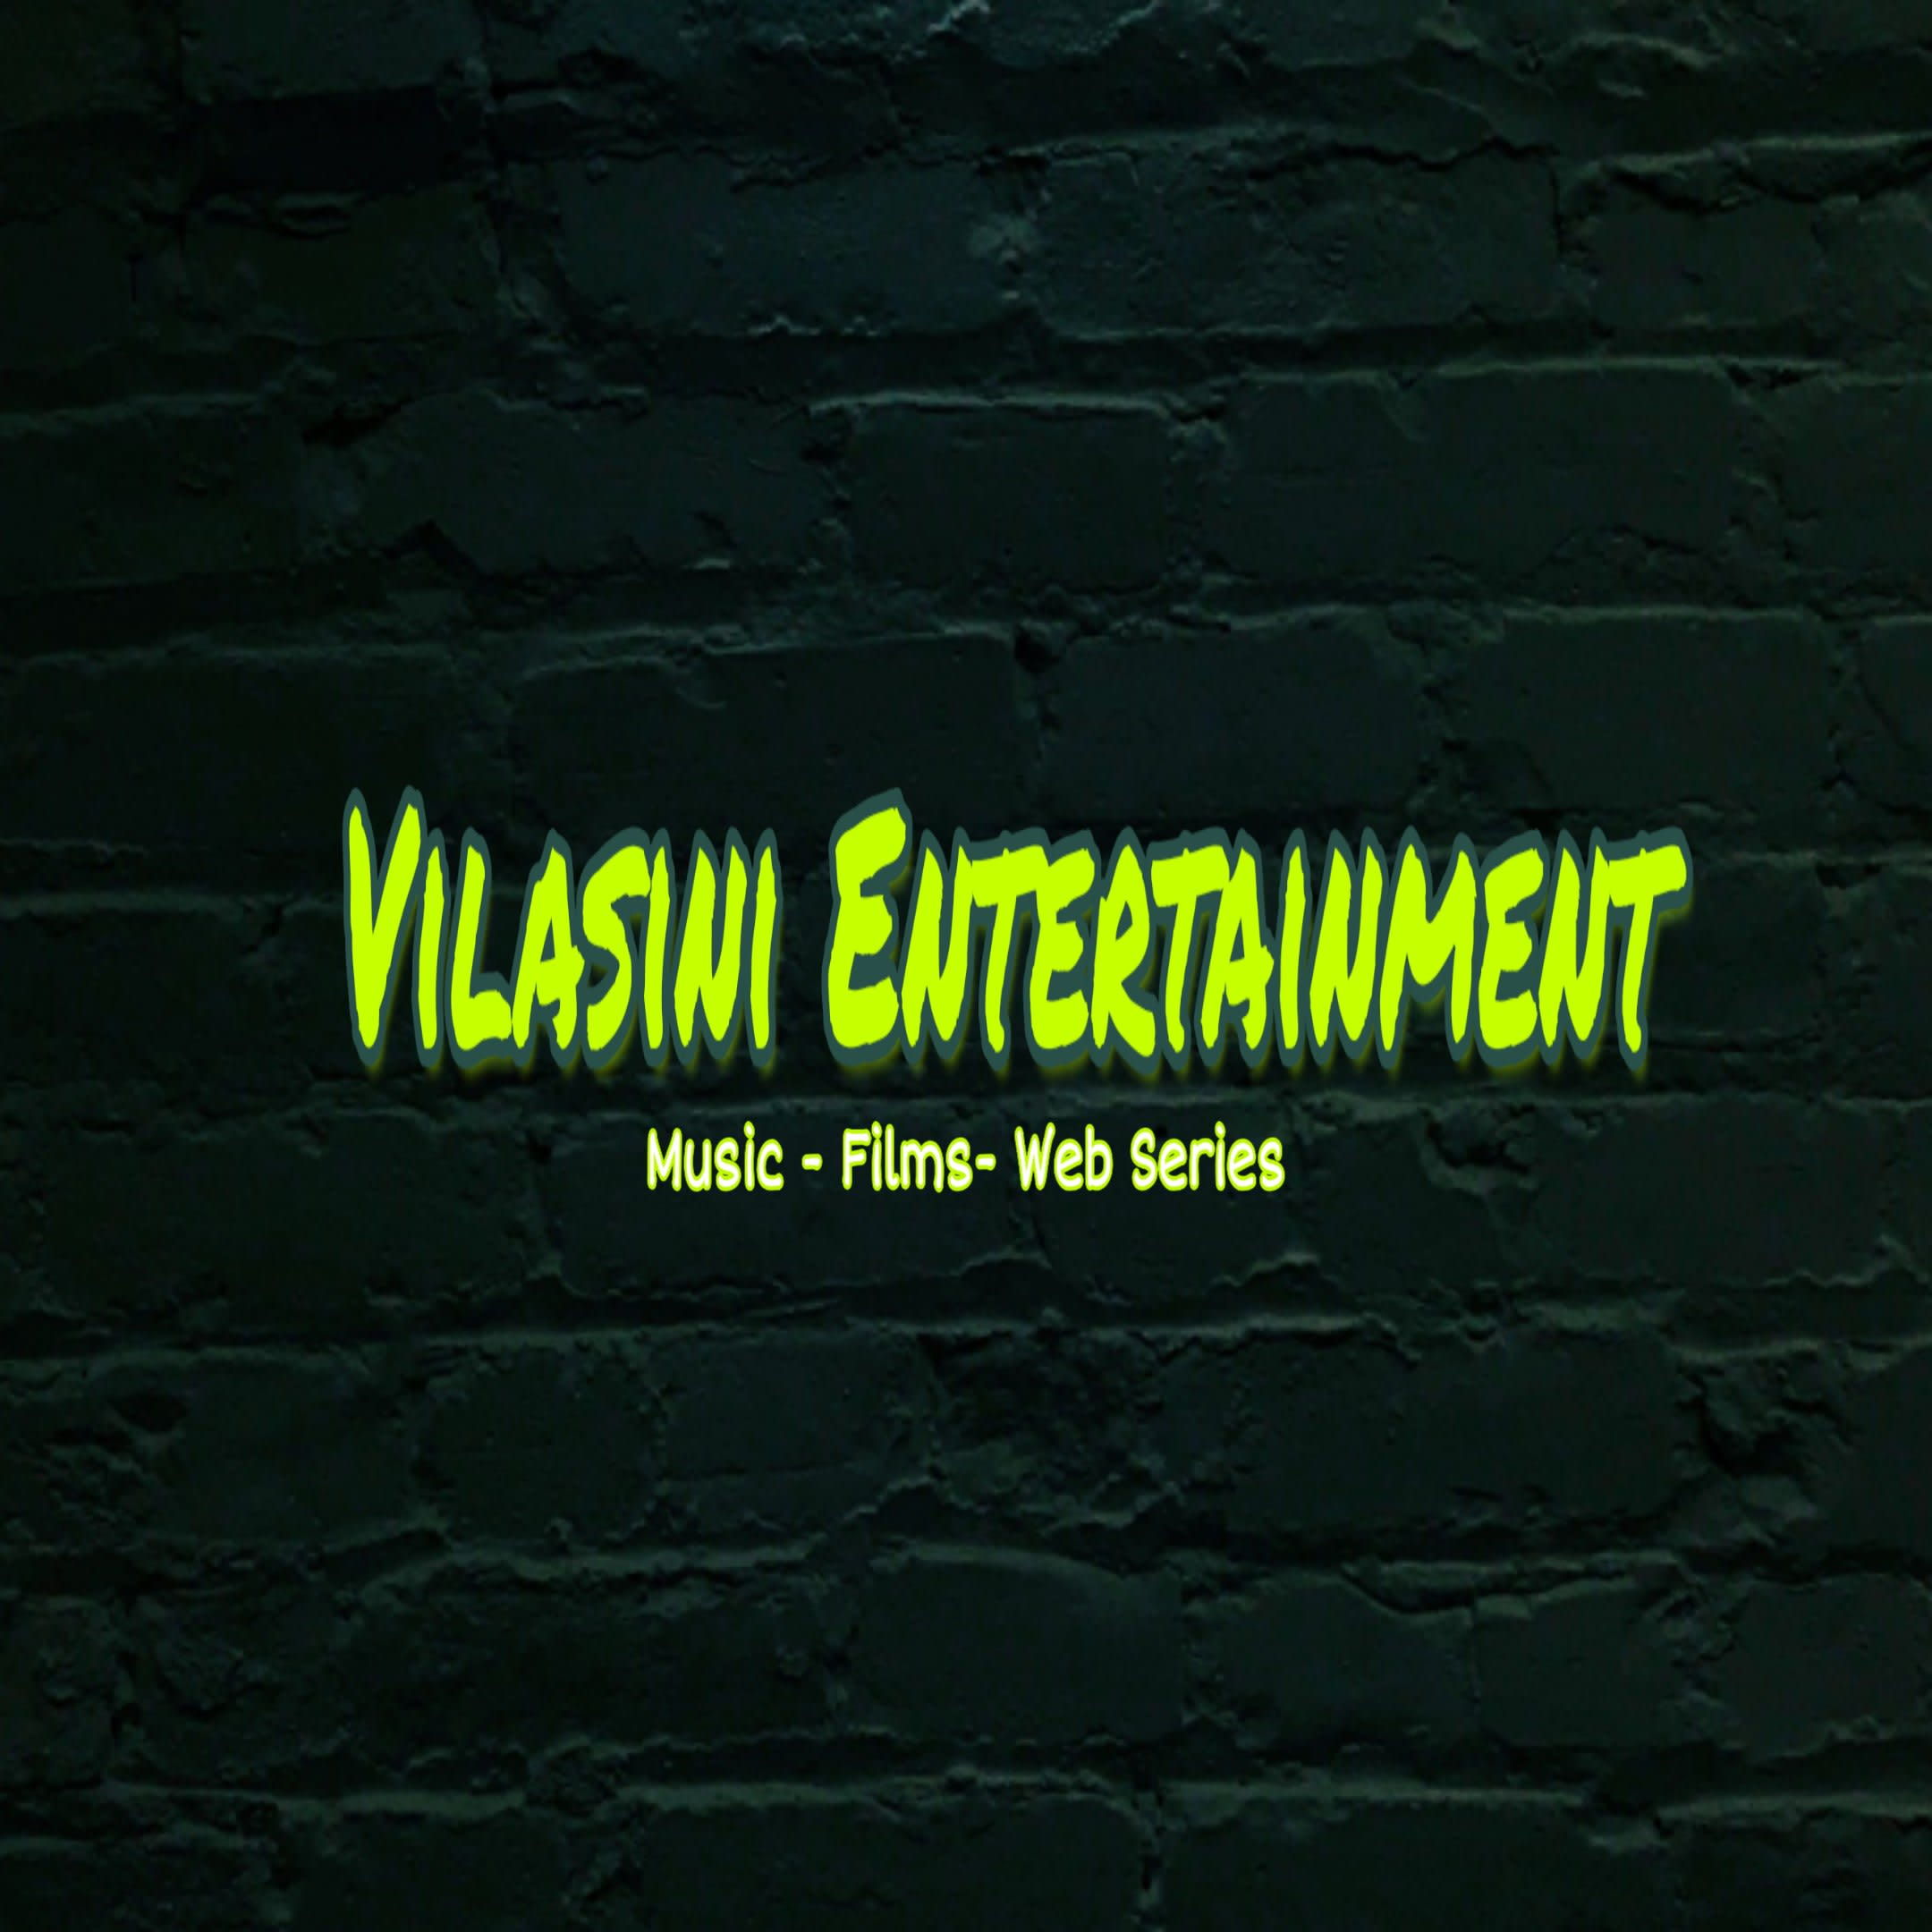 Vilasini Entertainment